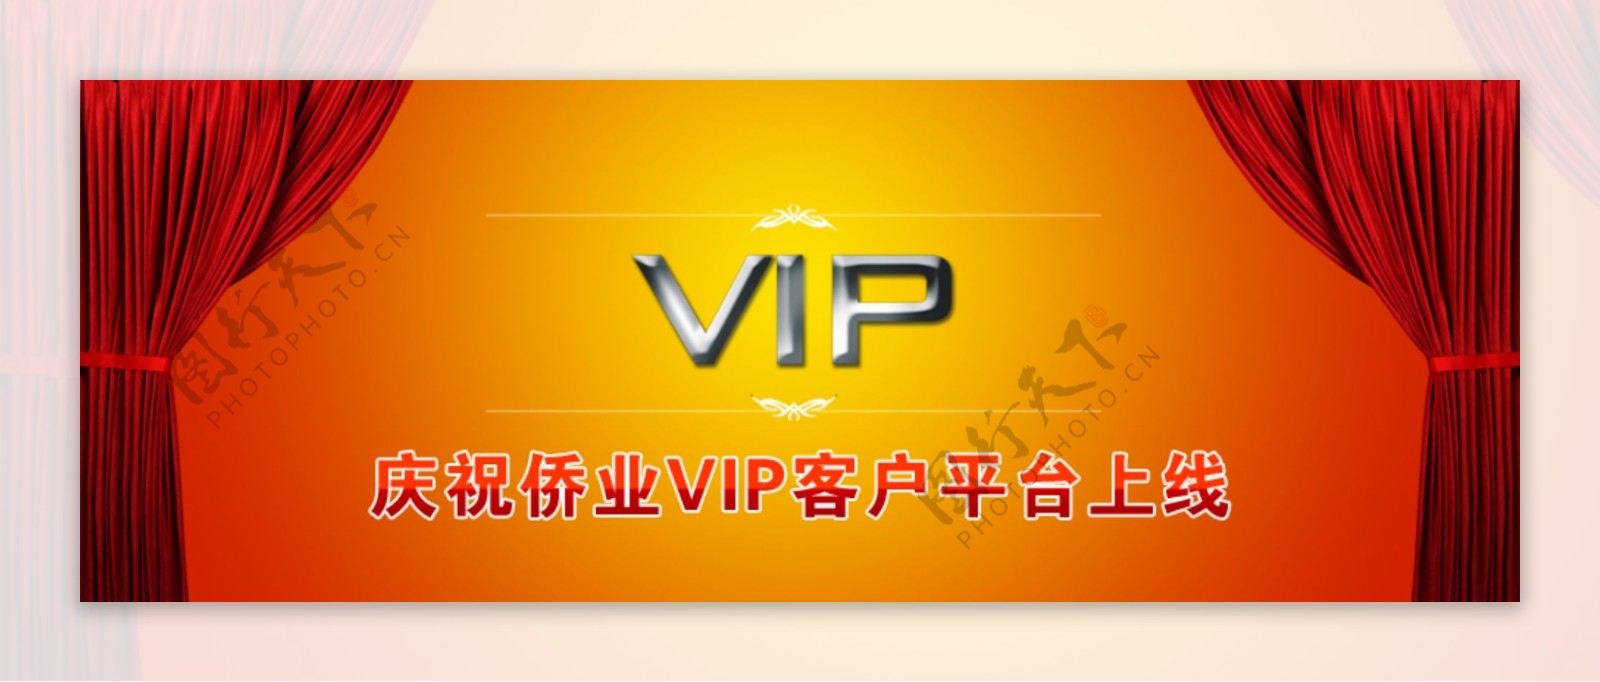 vip客户平台上线网页banner图片